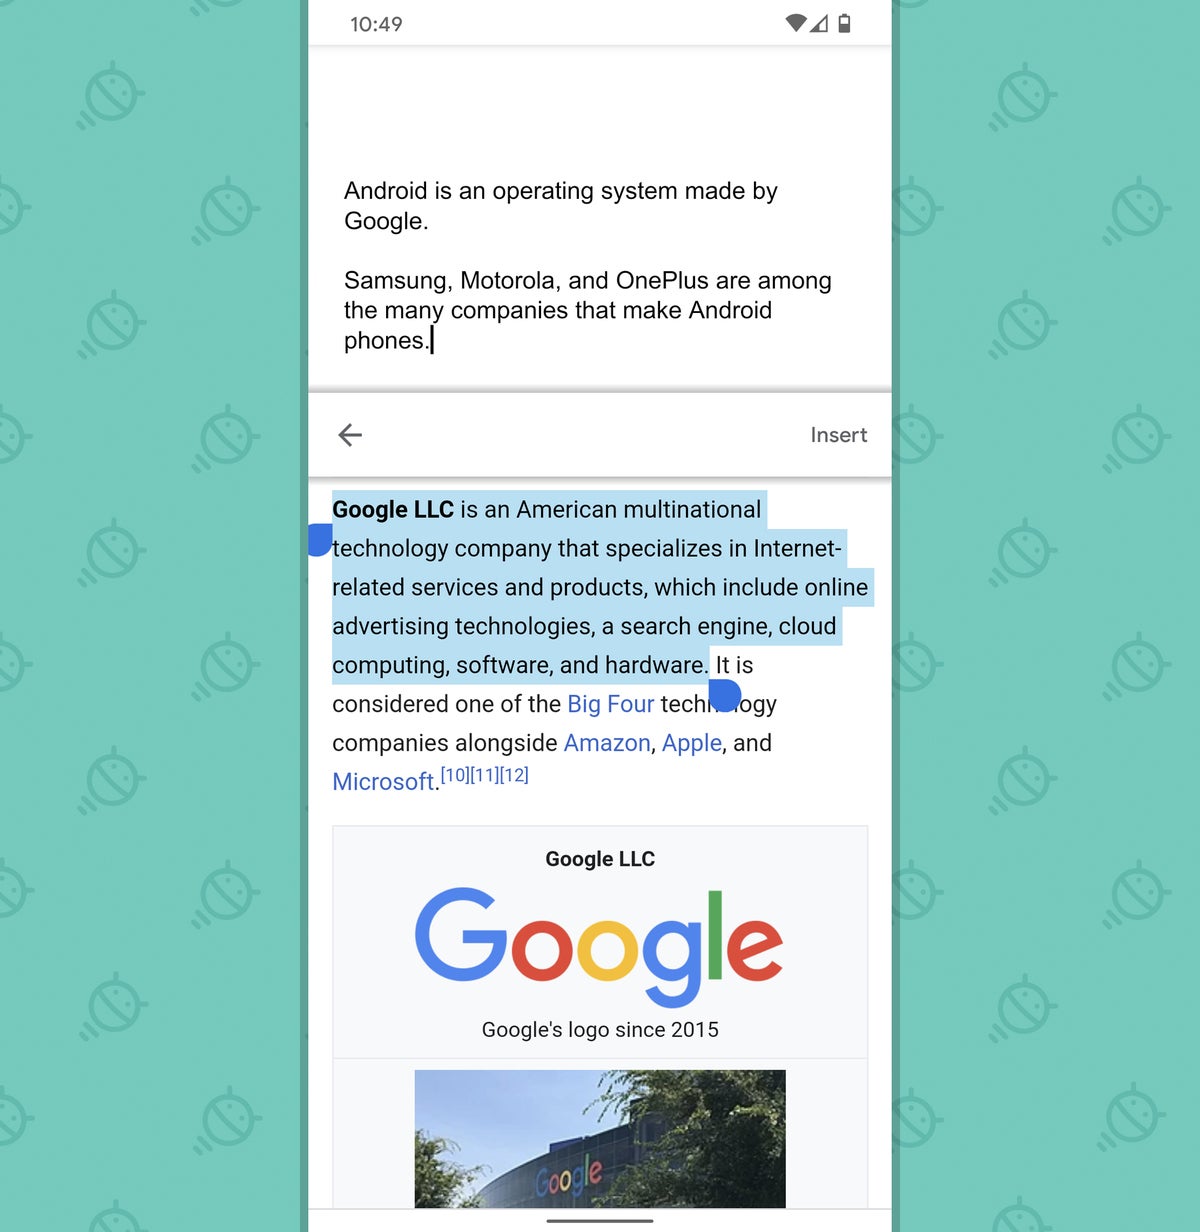 Google Docs Android: Explore - insert text